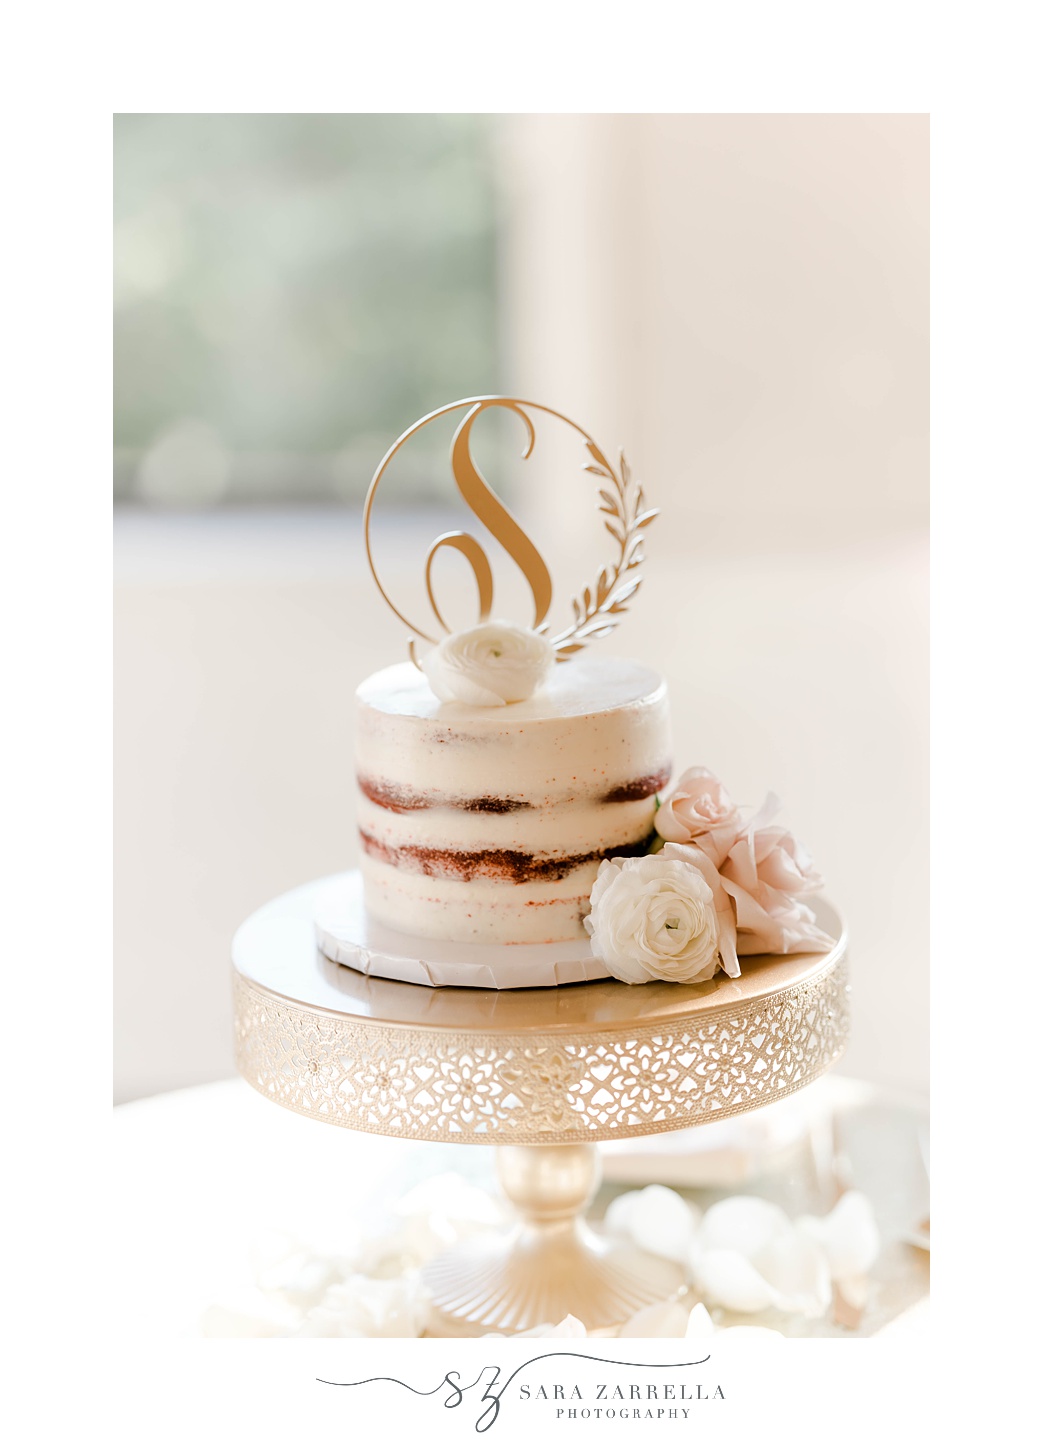 custom wedding cake topper with "S" on naked cake at Harbor Lights